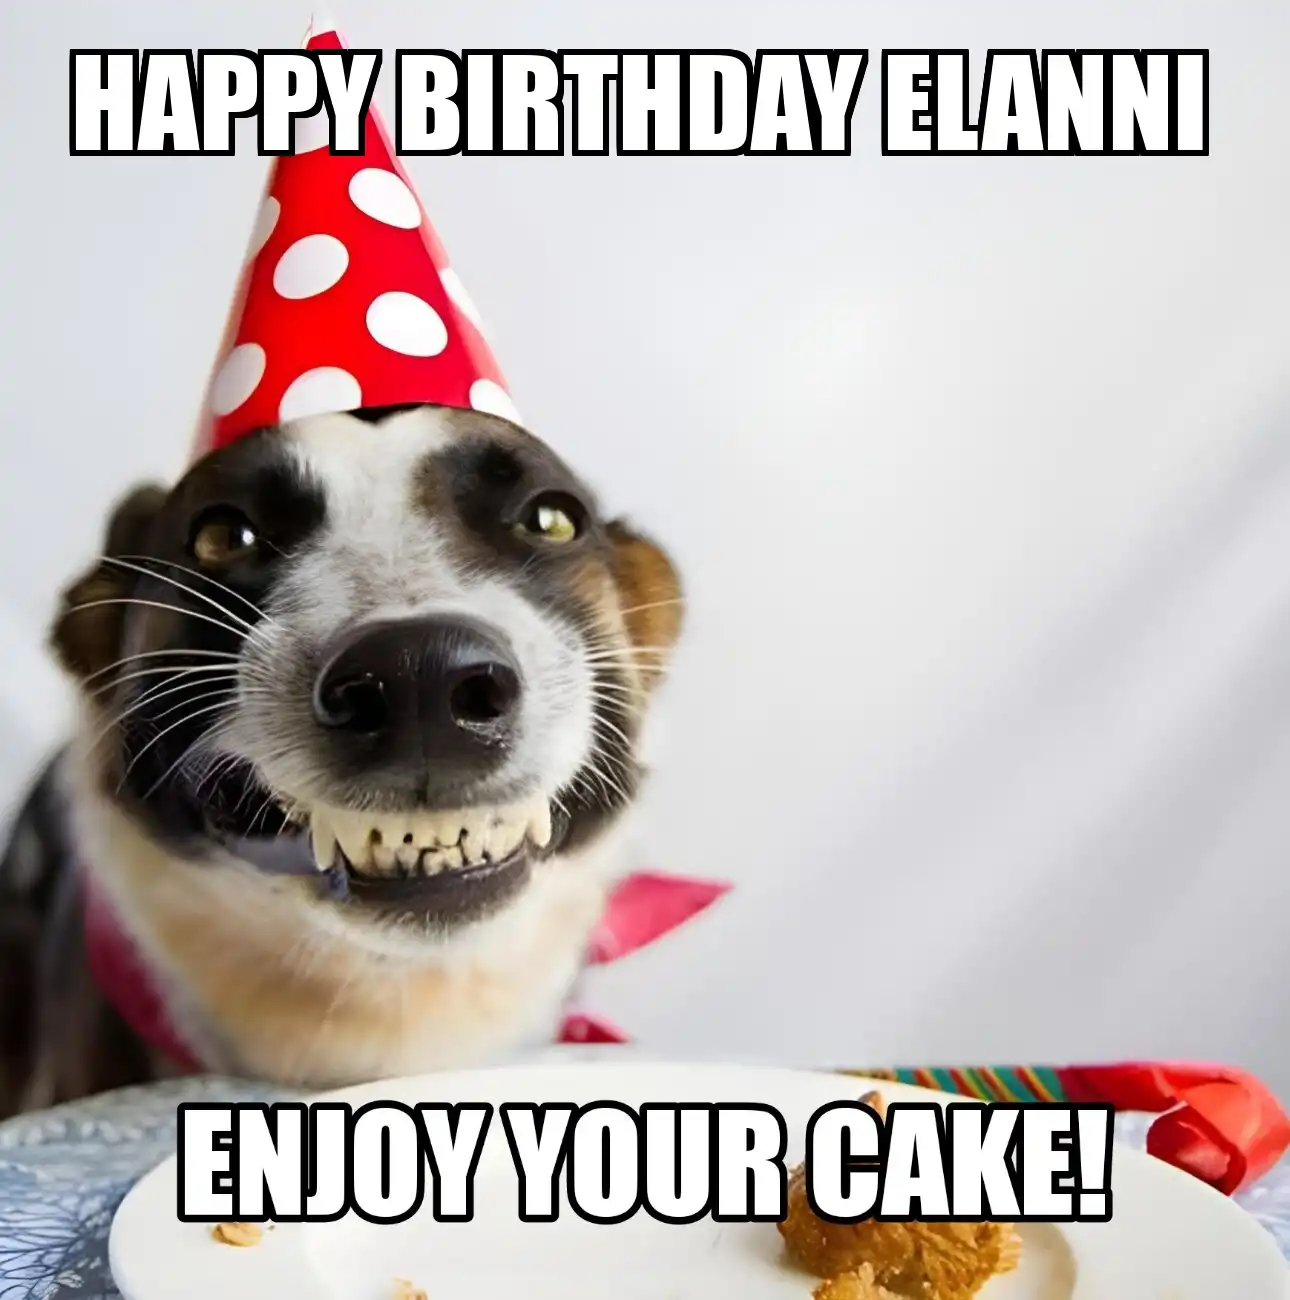 Happy Birthday Elanni Enjoy Your Cake Dog Meme